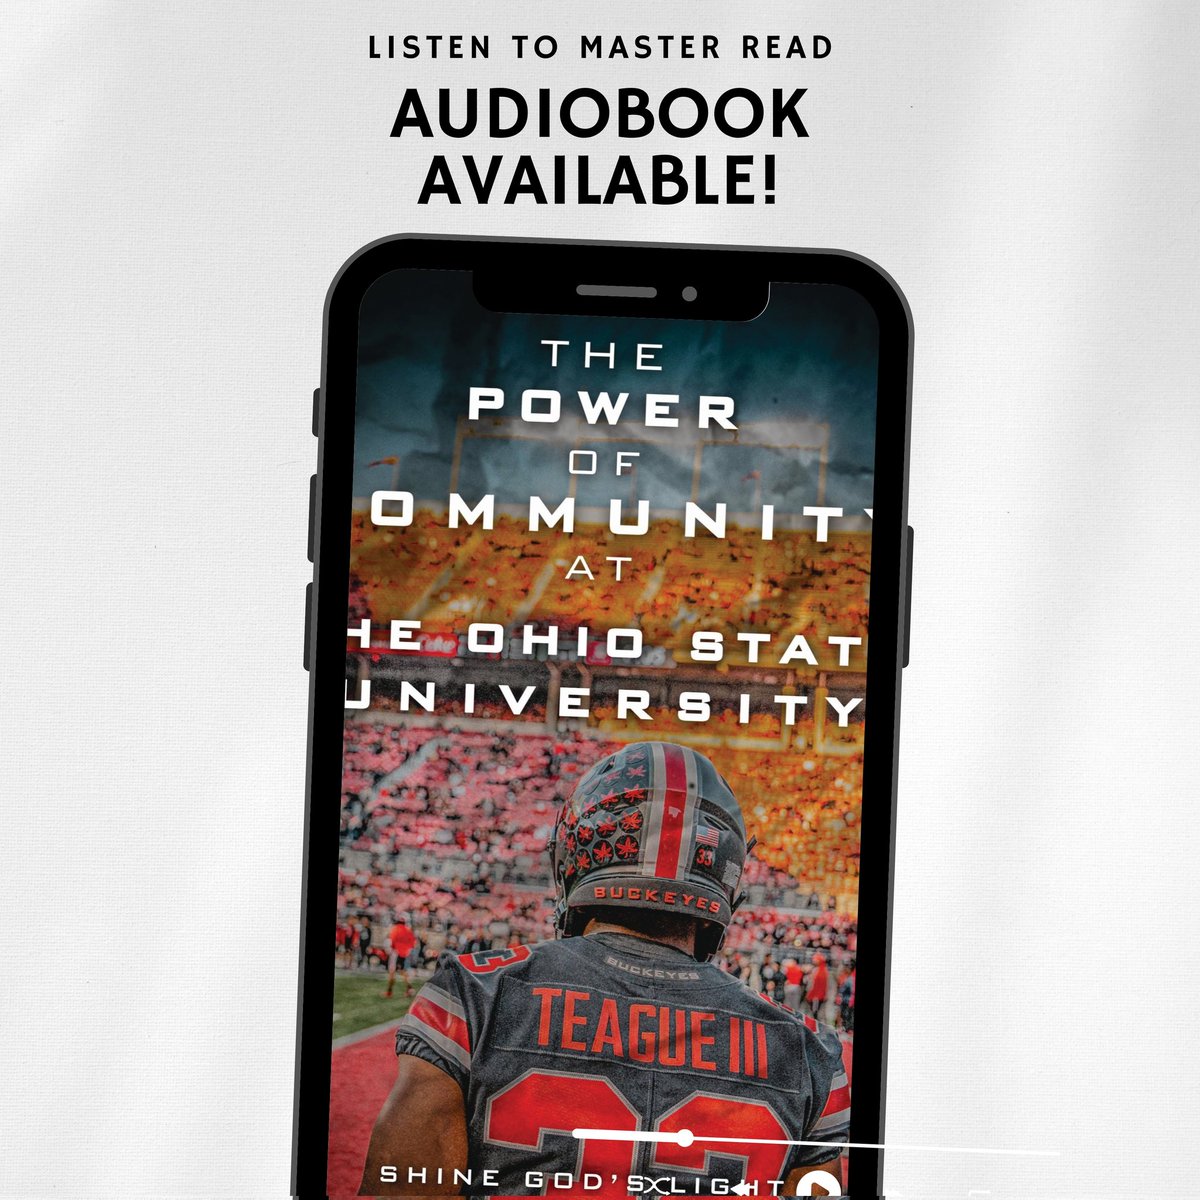 Get The ‘Power of Community’ Audiobook For Free When You… Write Your Testimonial! 👇🏽👇🏽 masterwteagueiii.com/testimonials